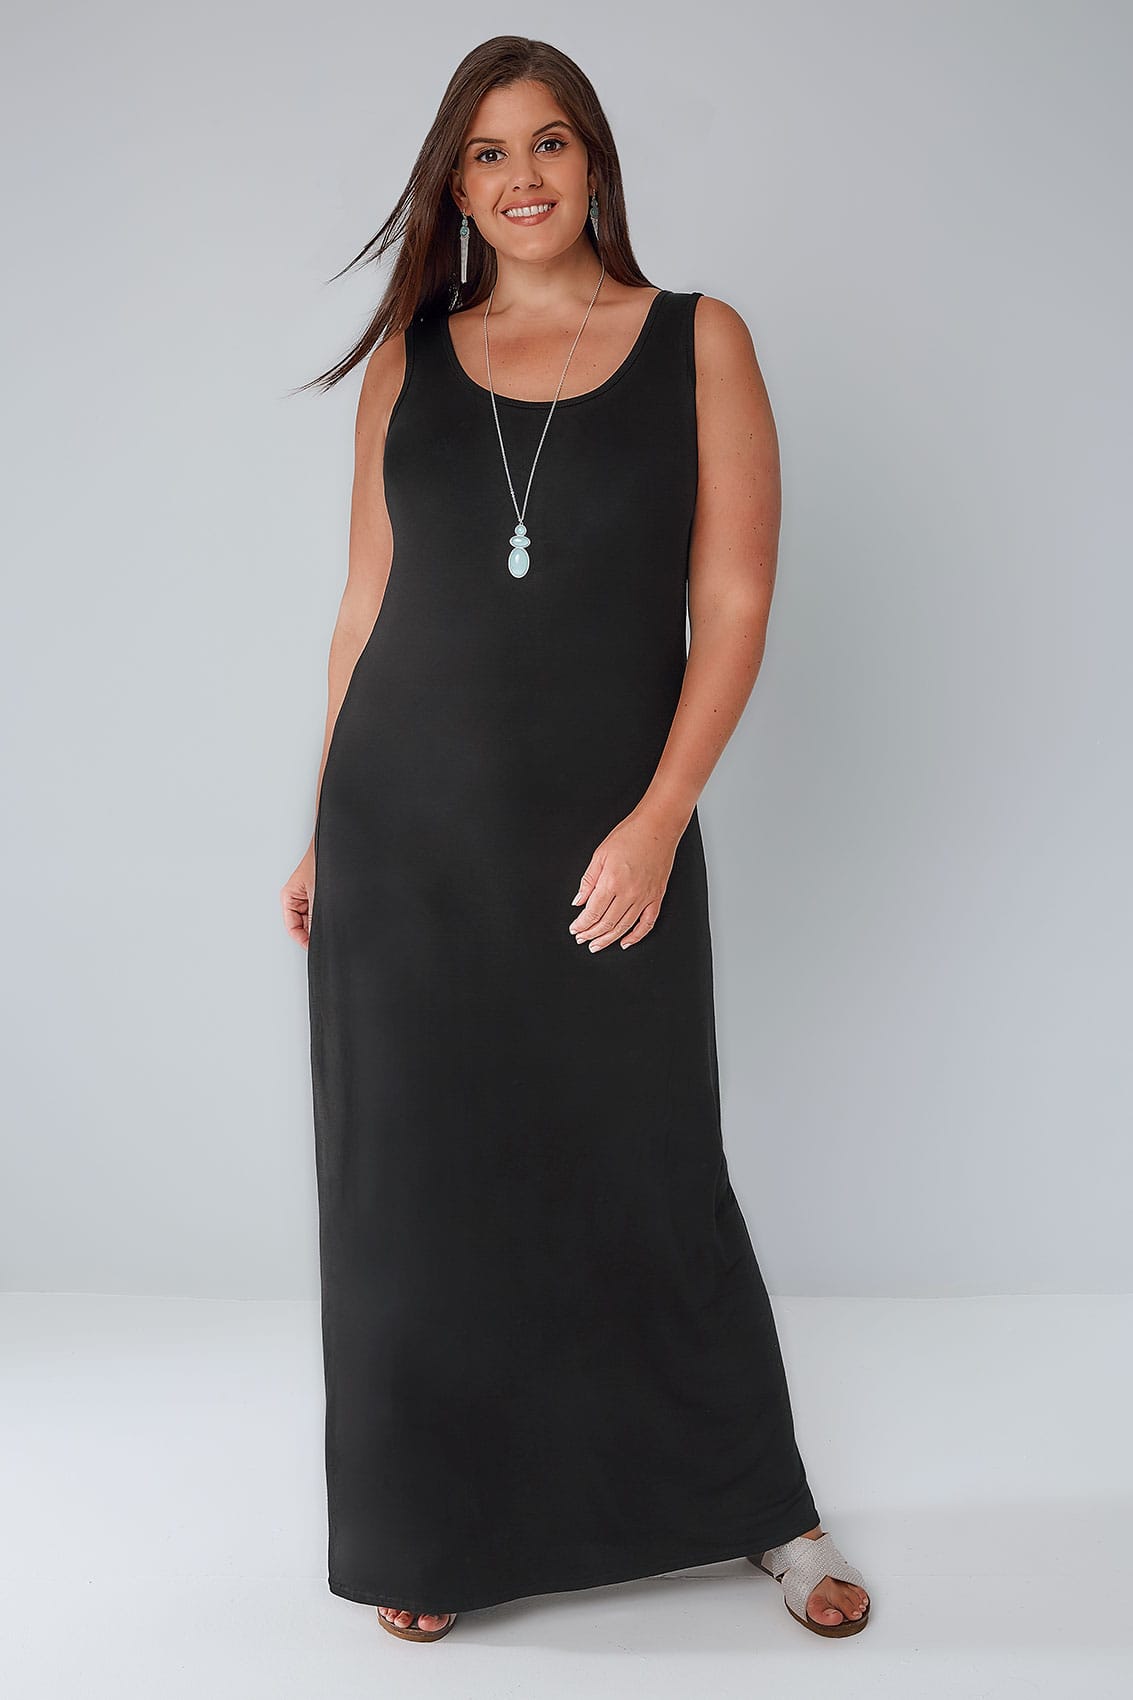 Black Plain Sleeveless Jersey Maxi Dress, Plus size 16 to 36